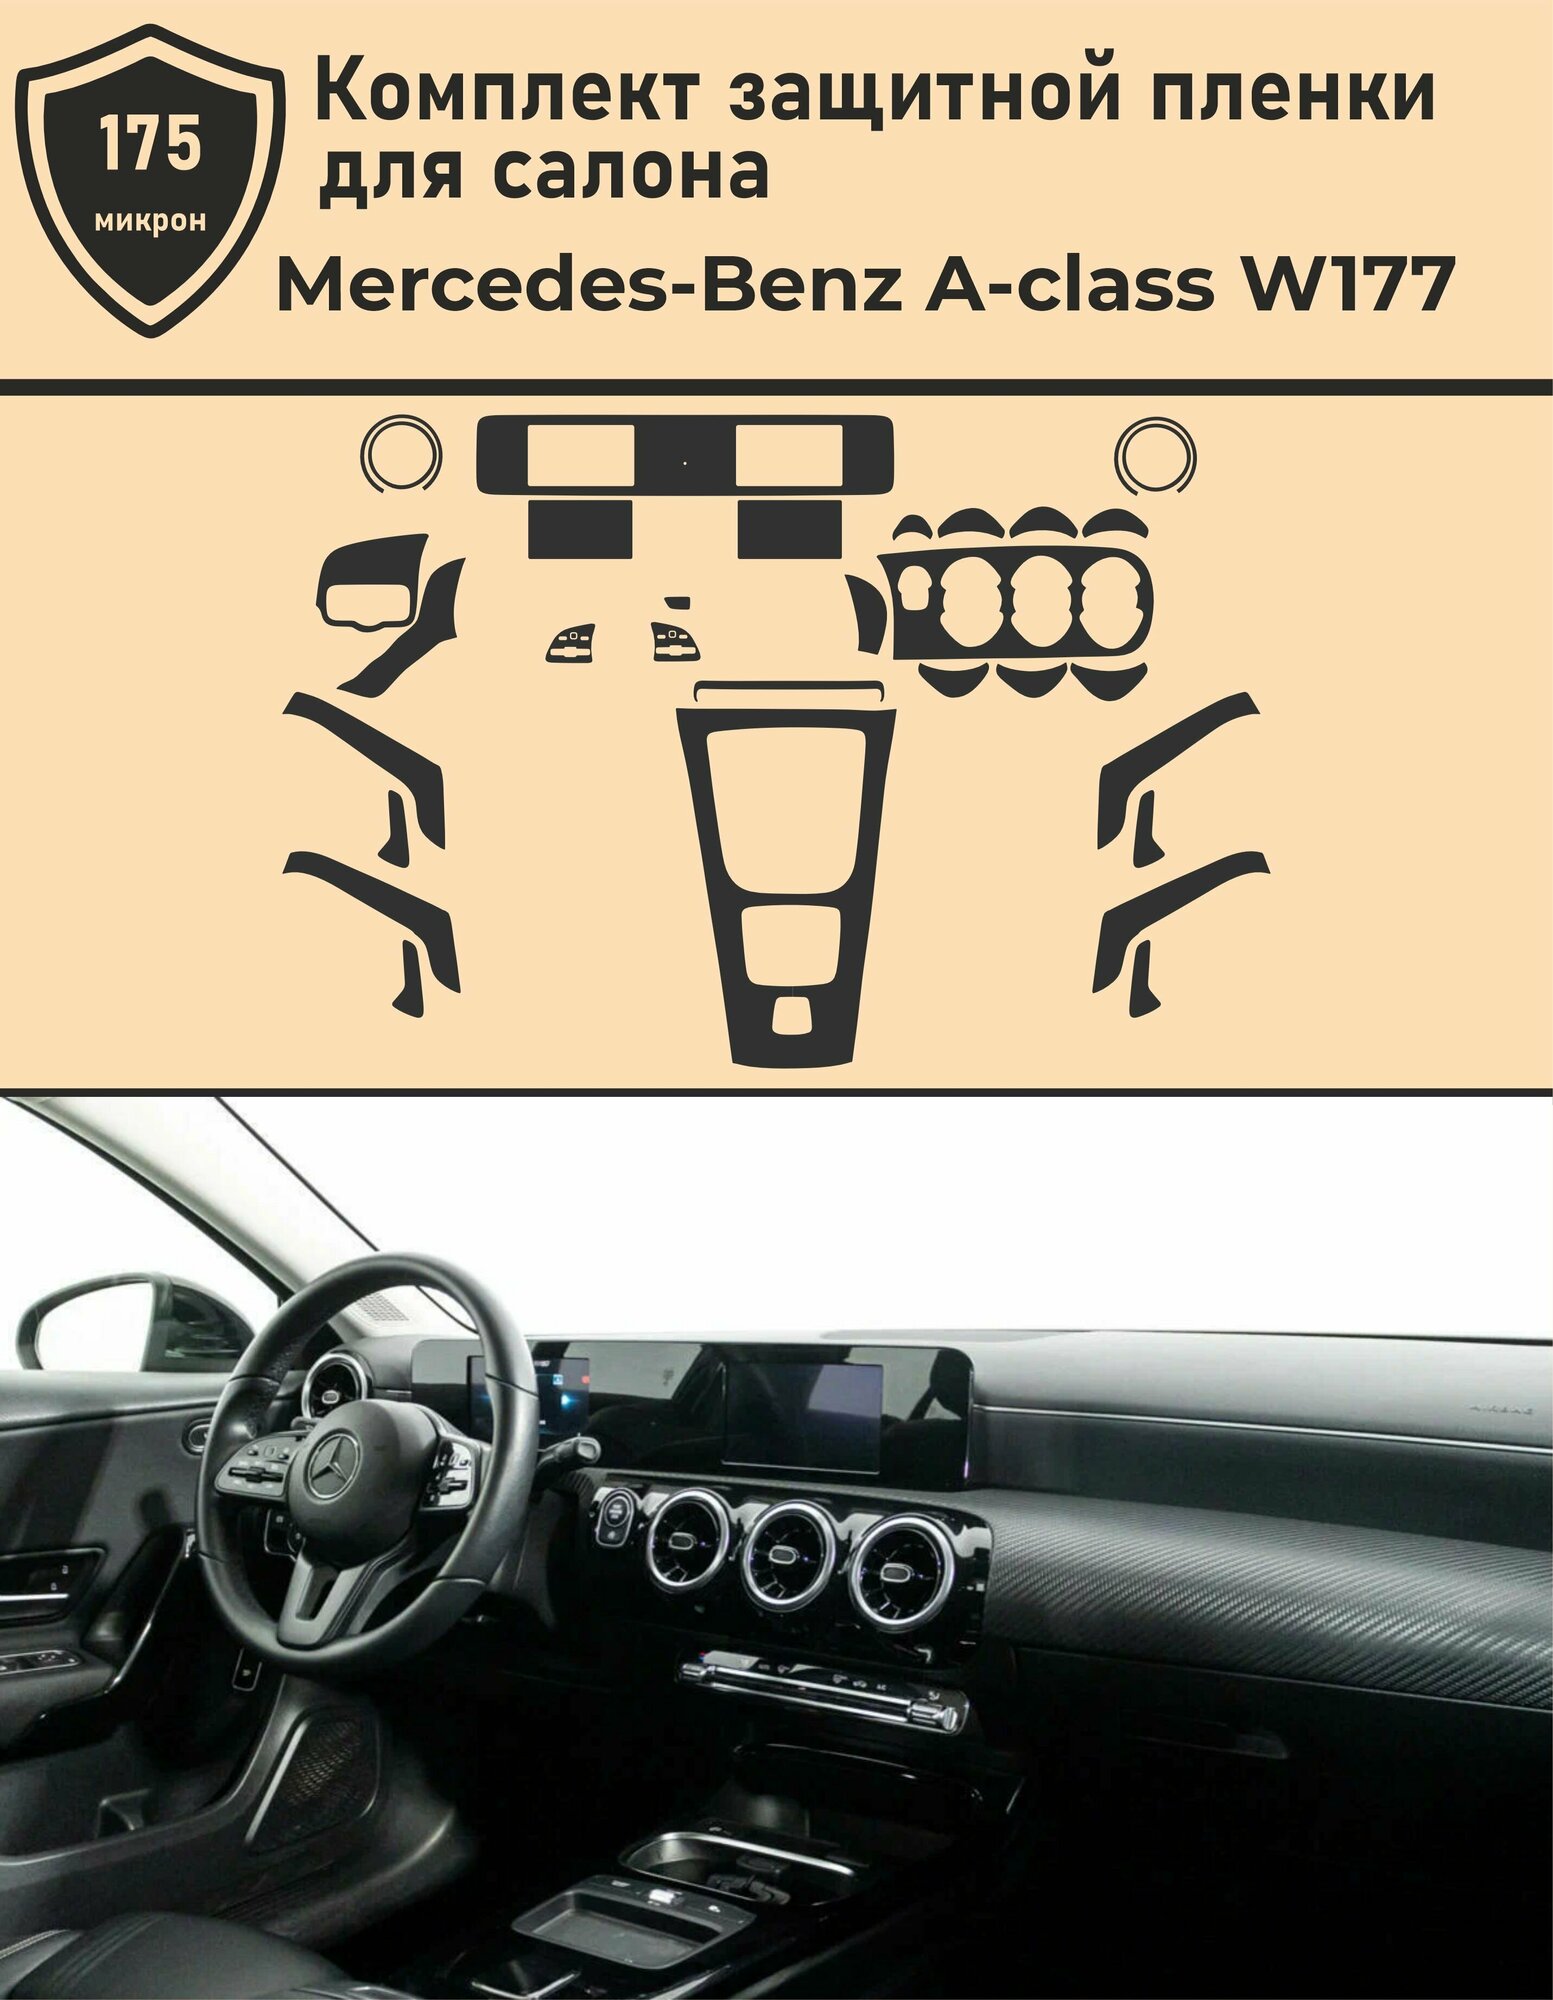 Mercedes-Benz A-class W177/Полный комплект защитных пленок для салона